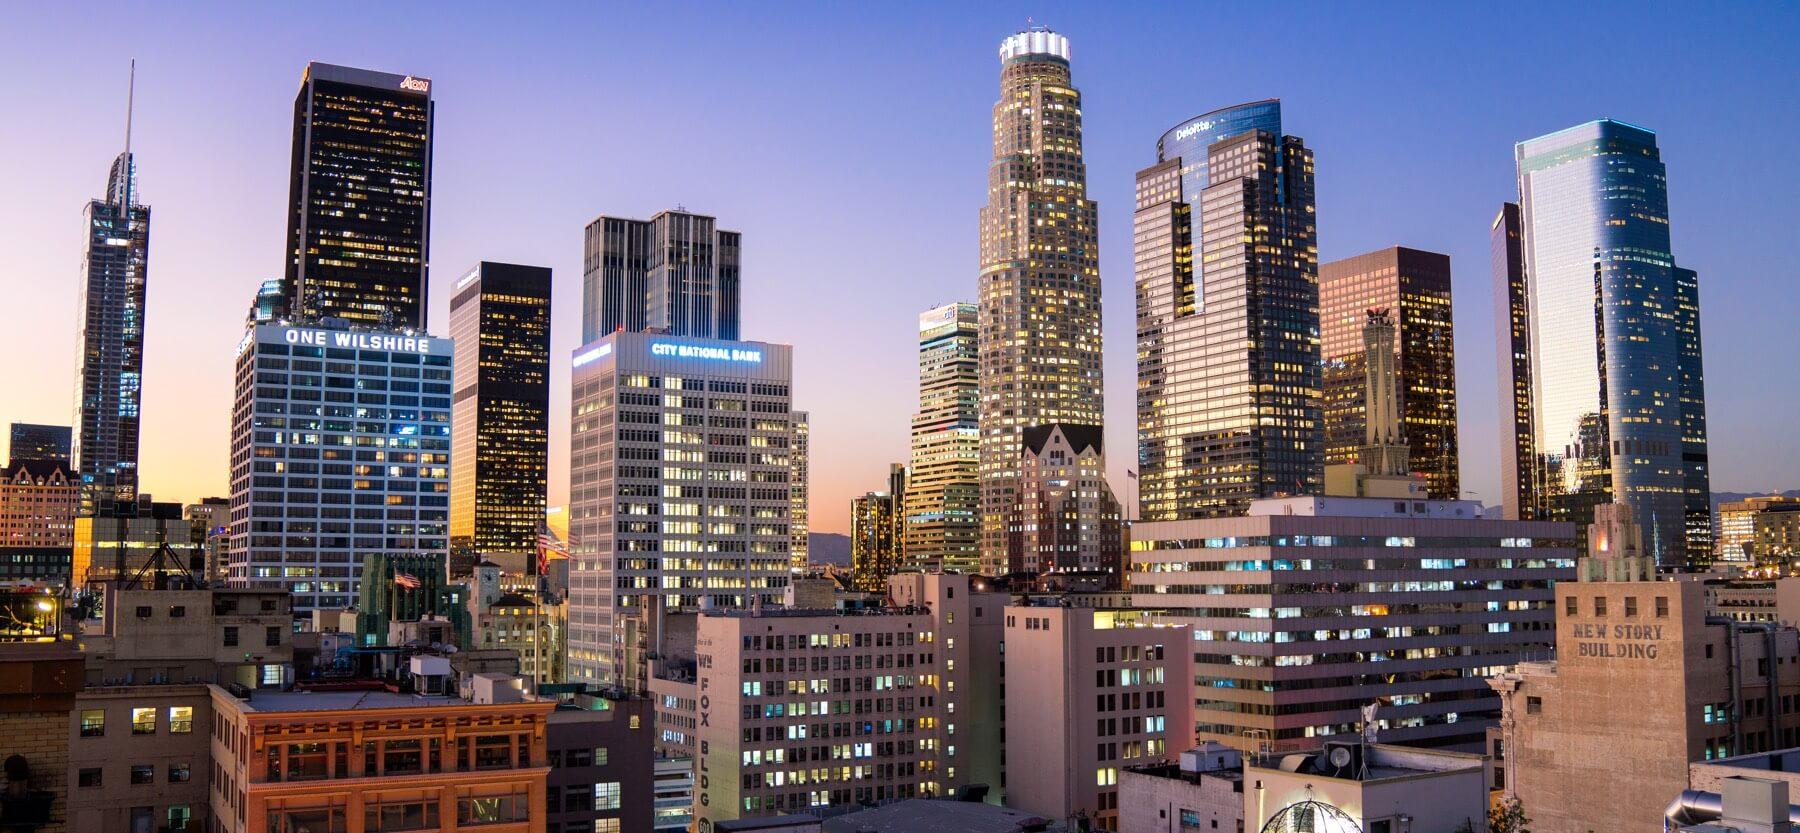 Los Angeles California skyline